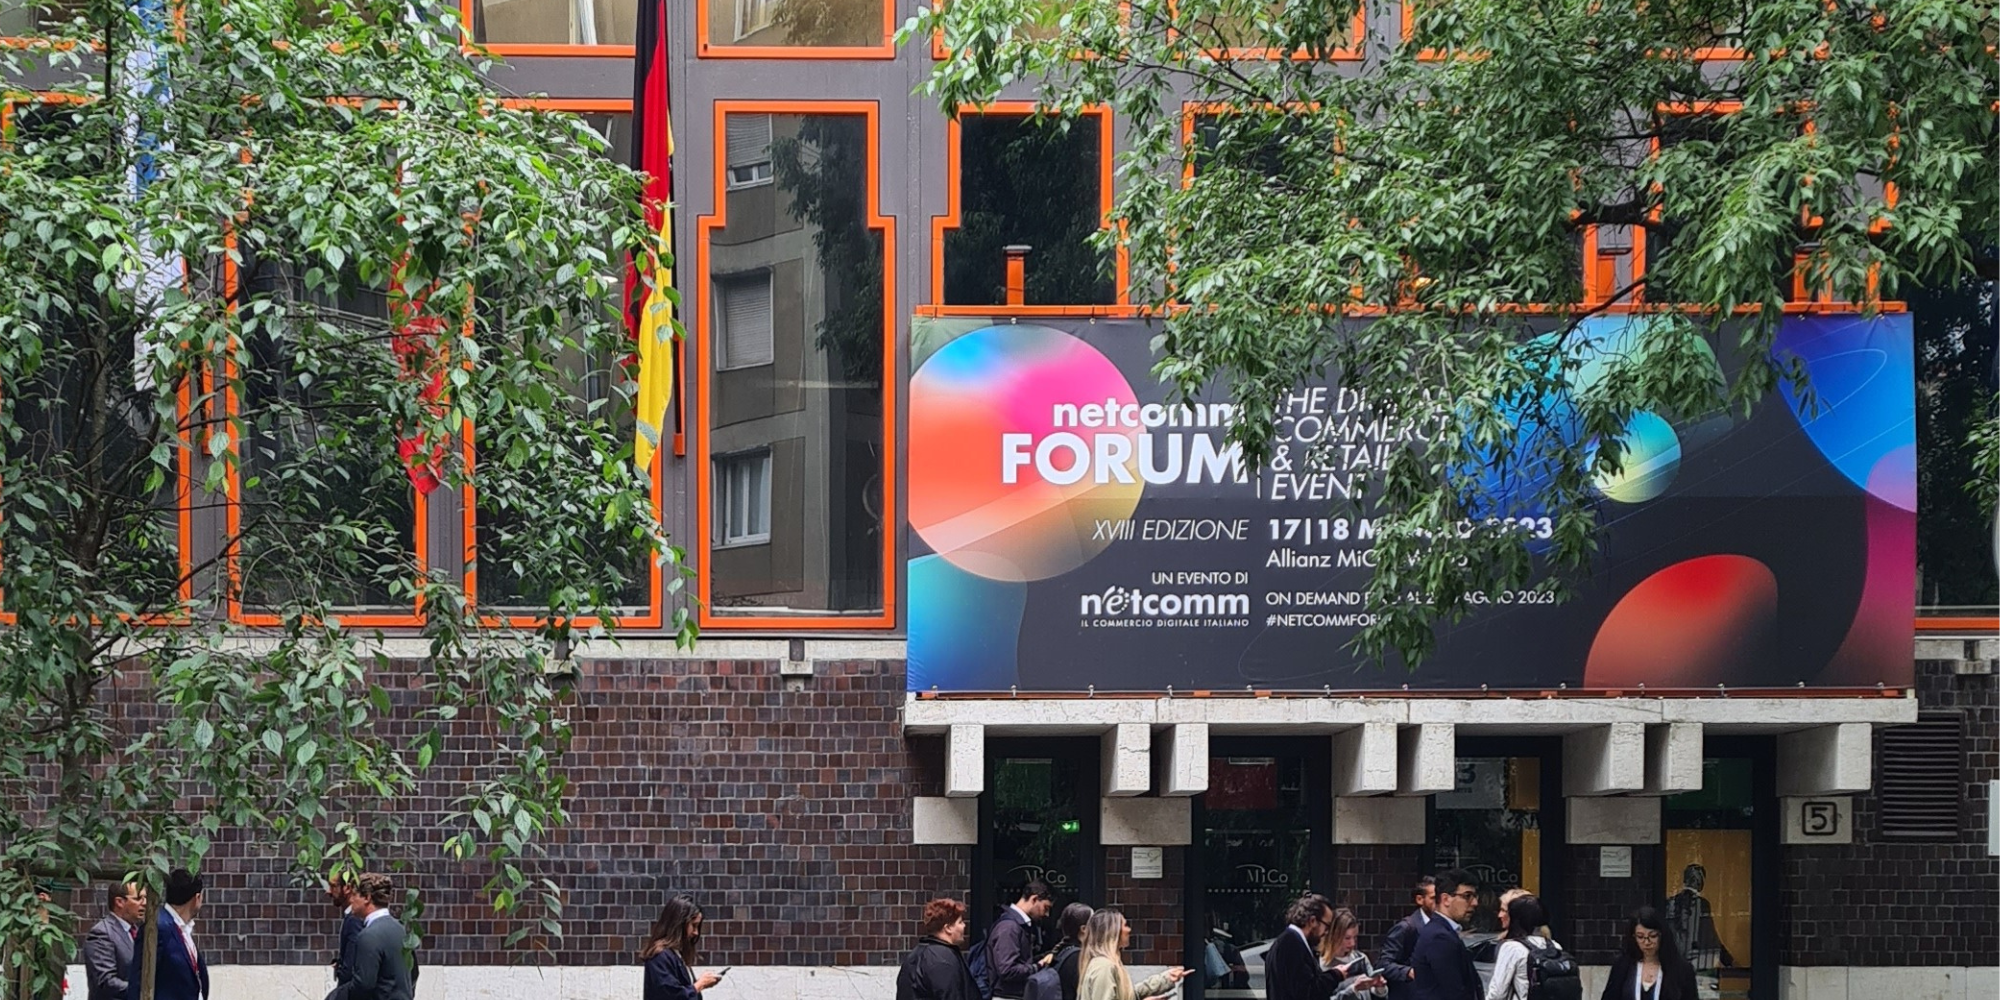 Netcomm Forum 2023